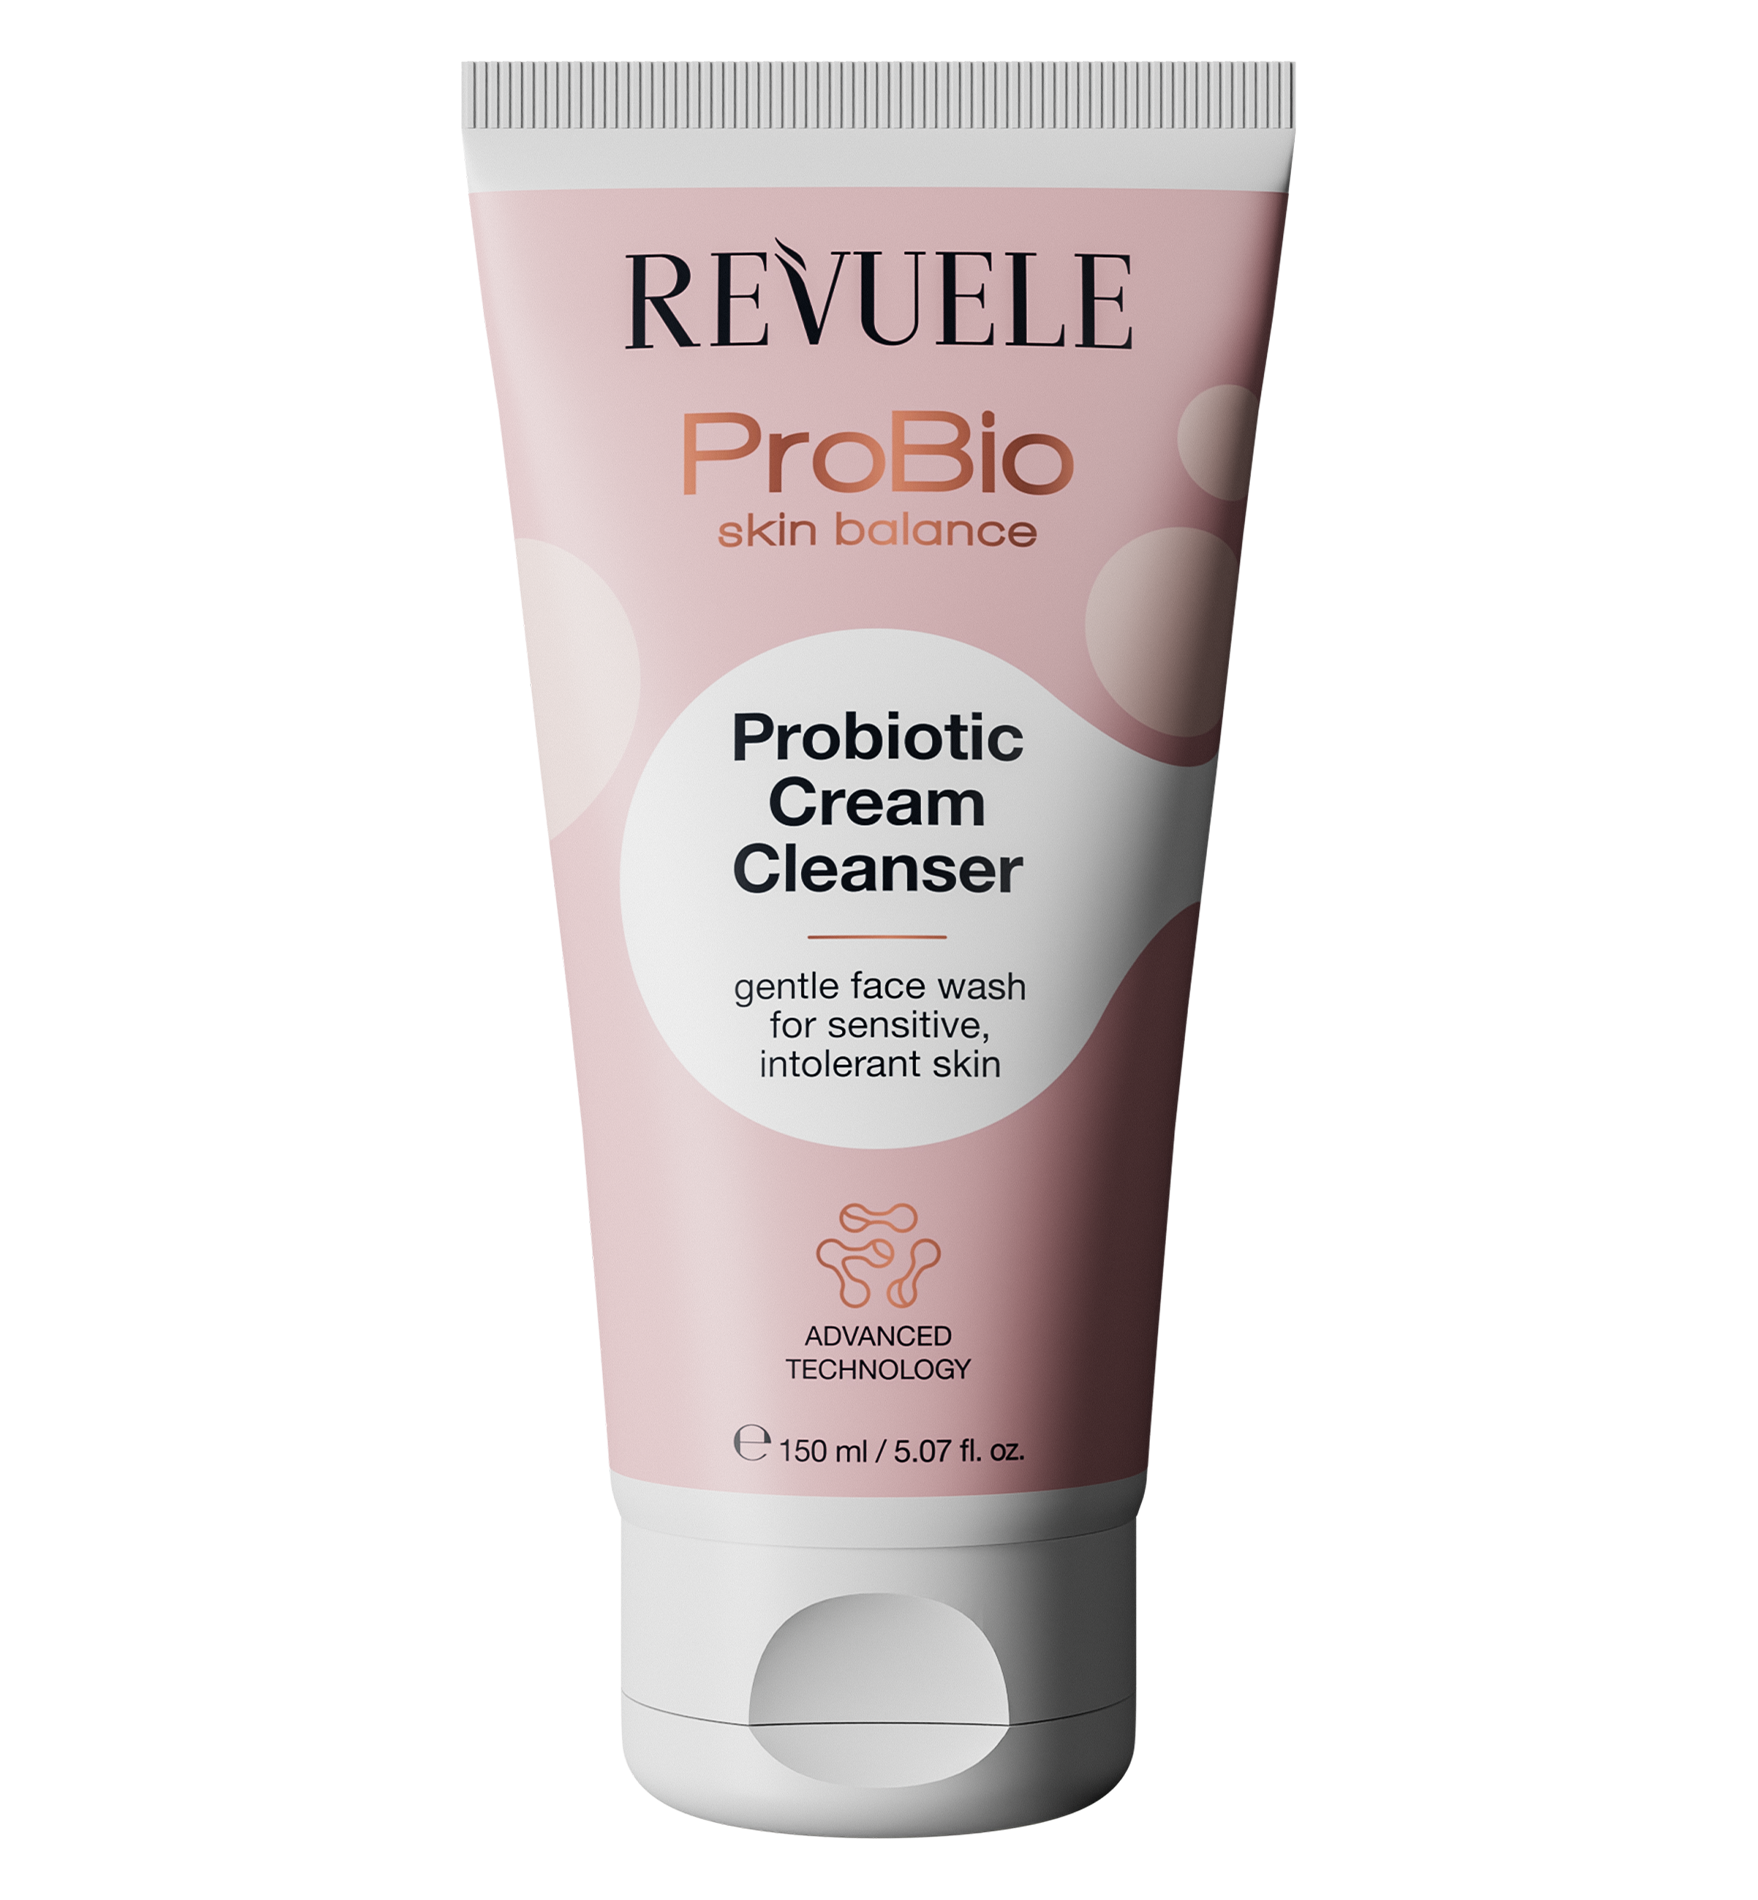 Revuele Probio skin balance probiotic cream cleanser 150 ml